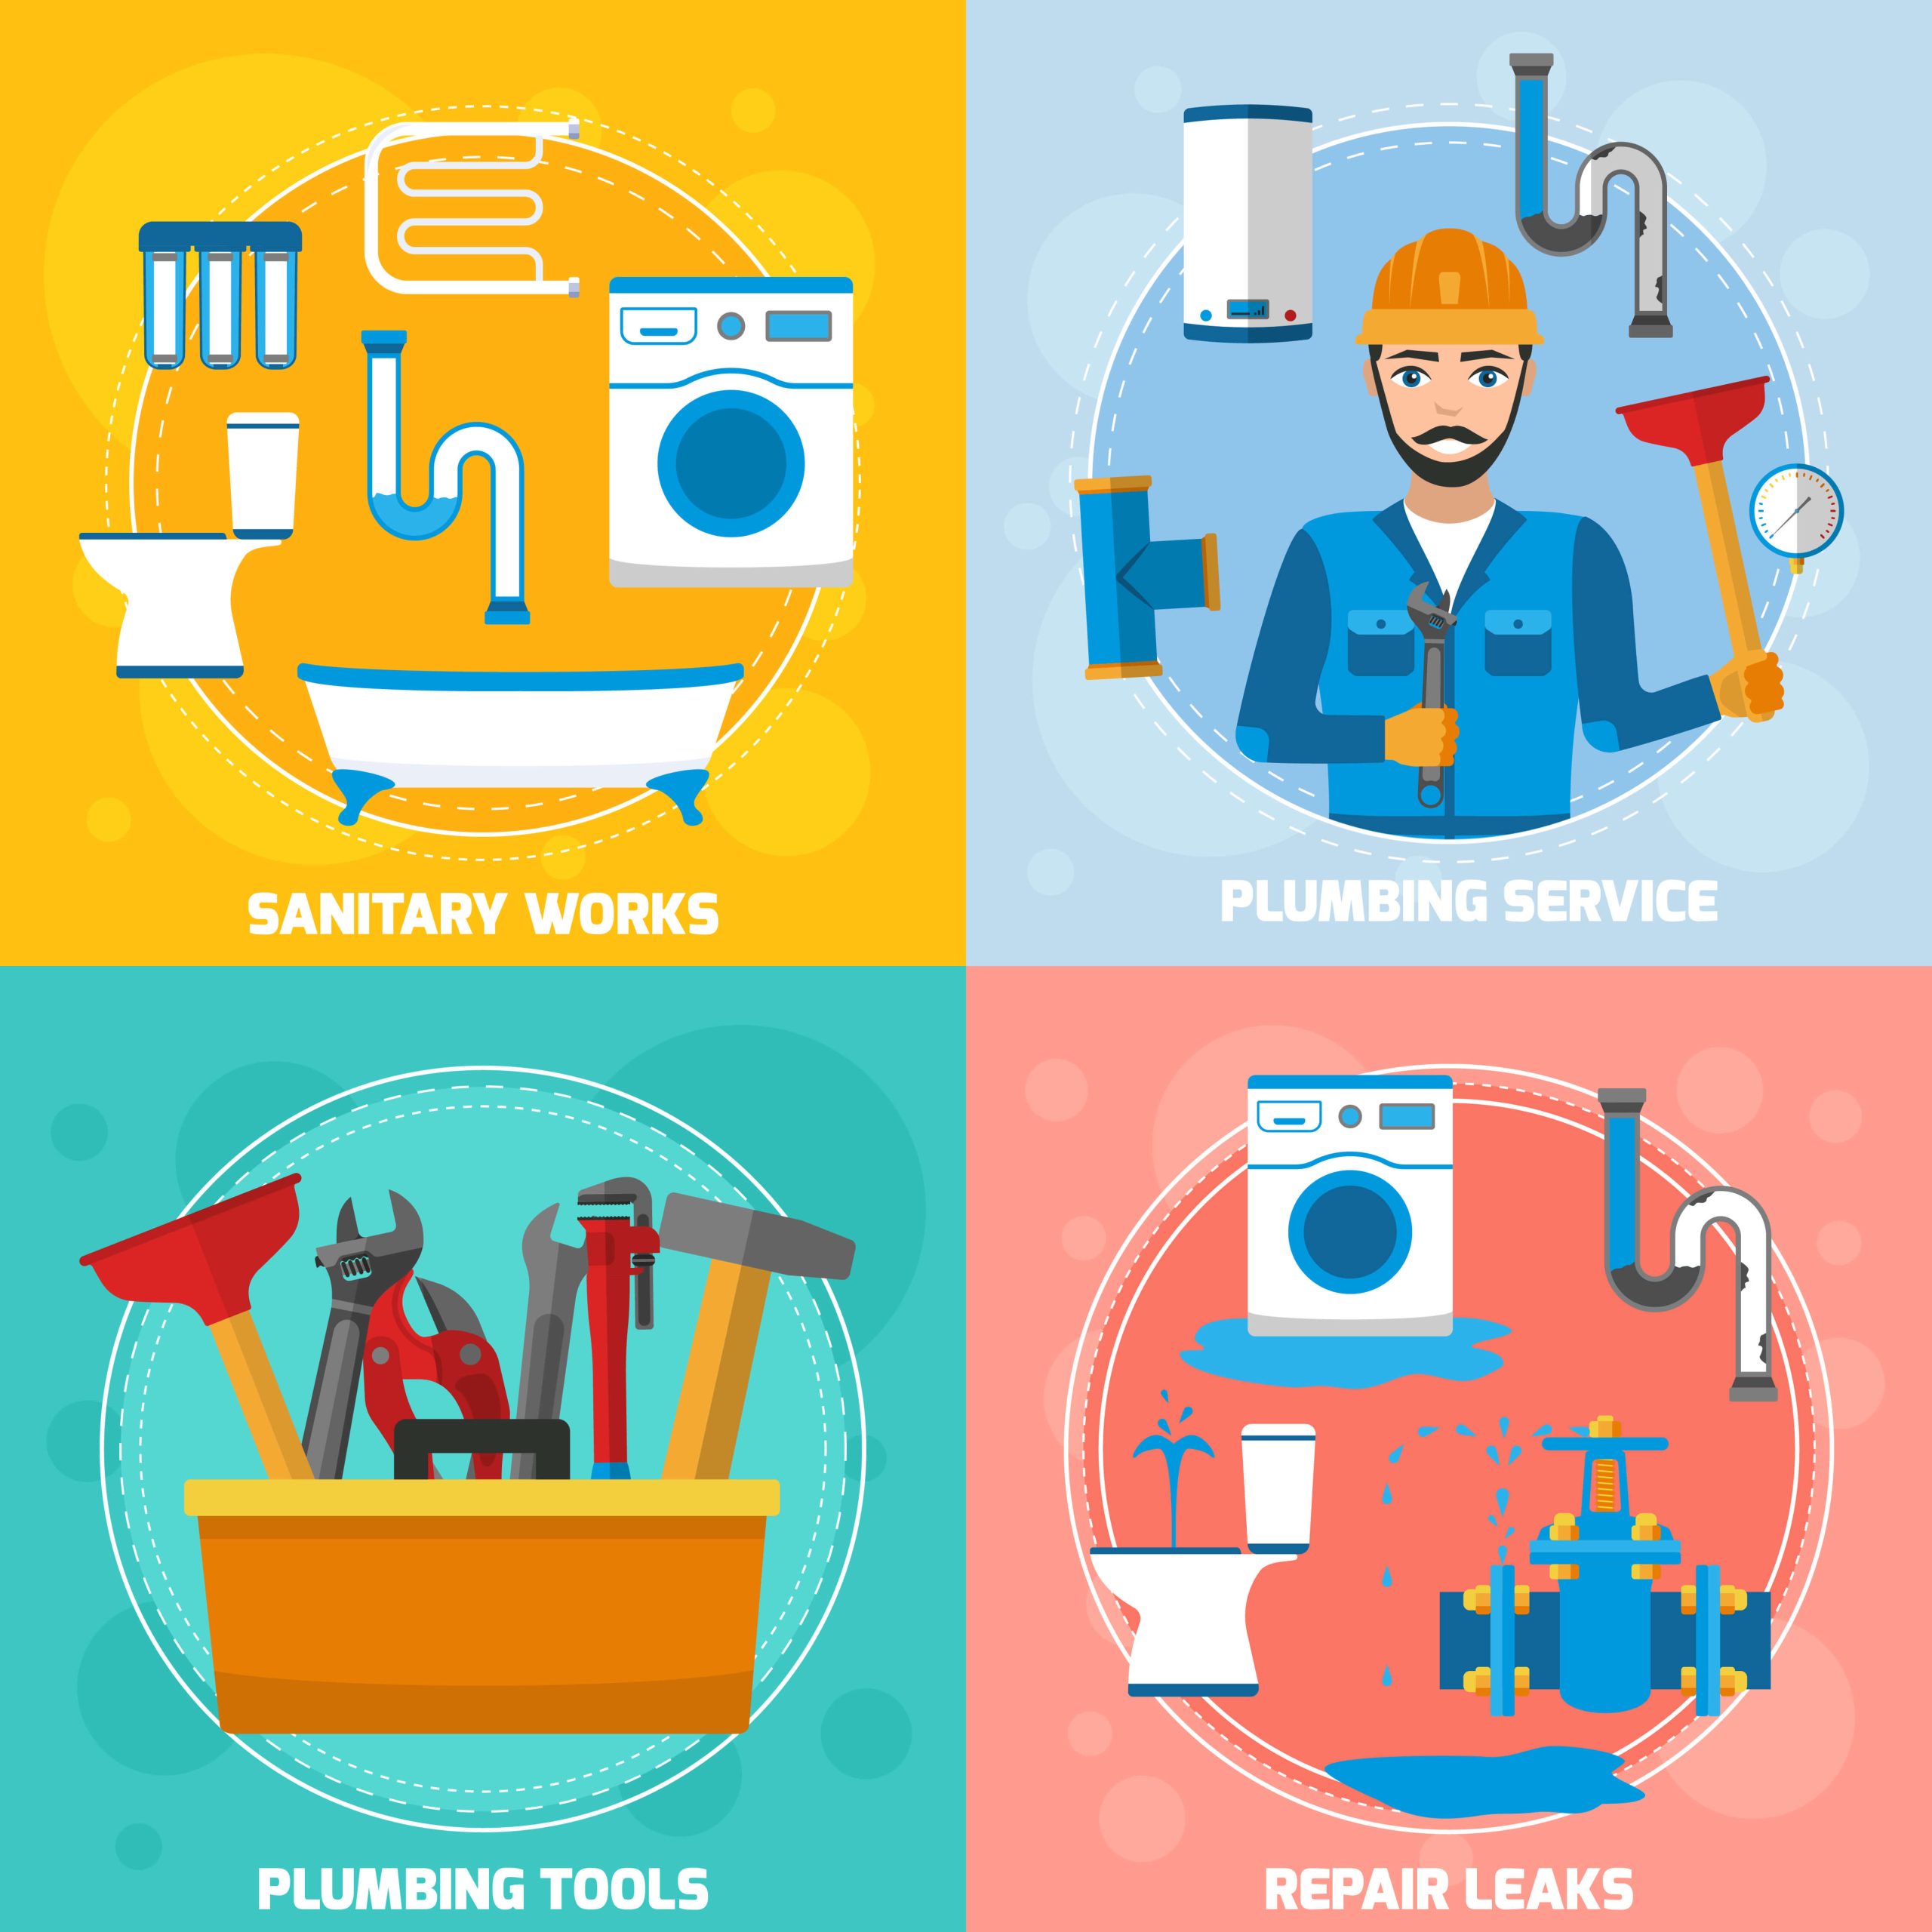 social media marketing in wyoming for plumbers